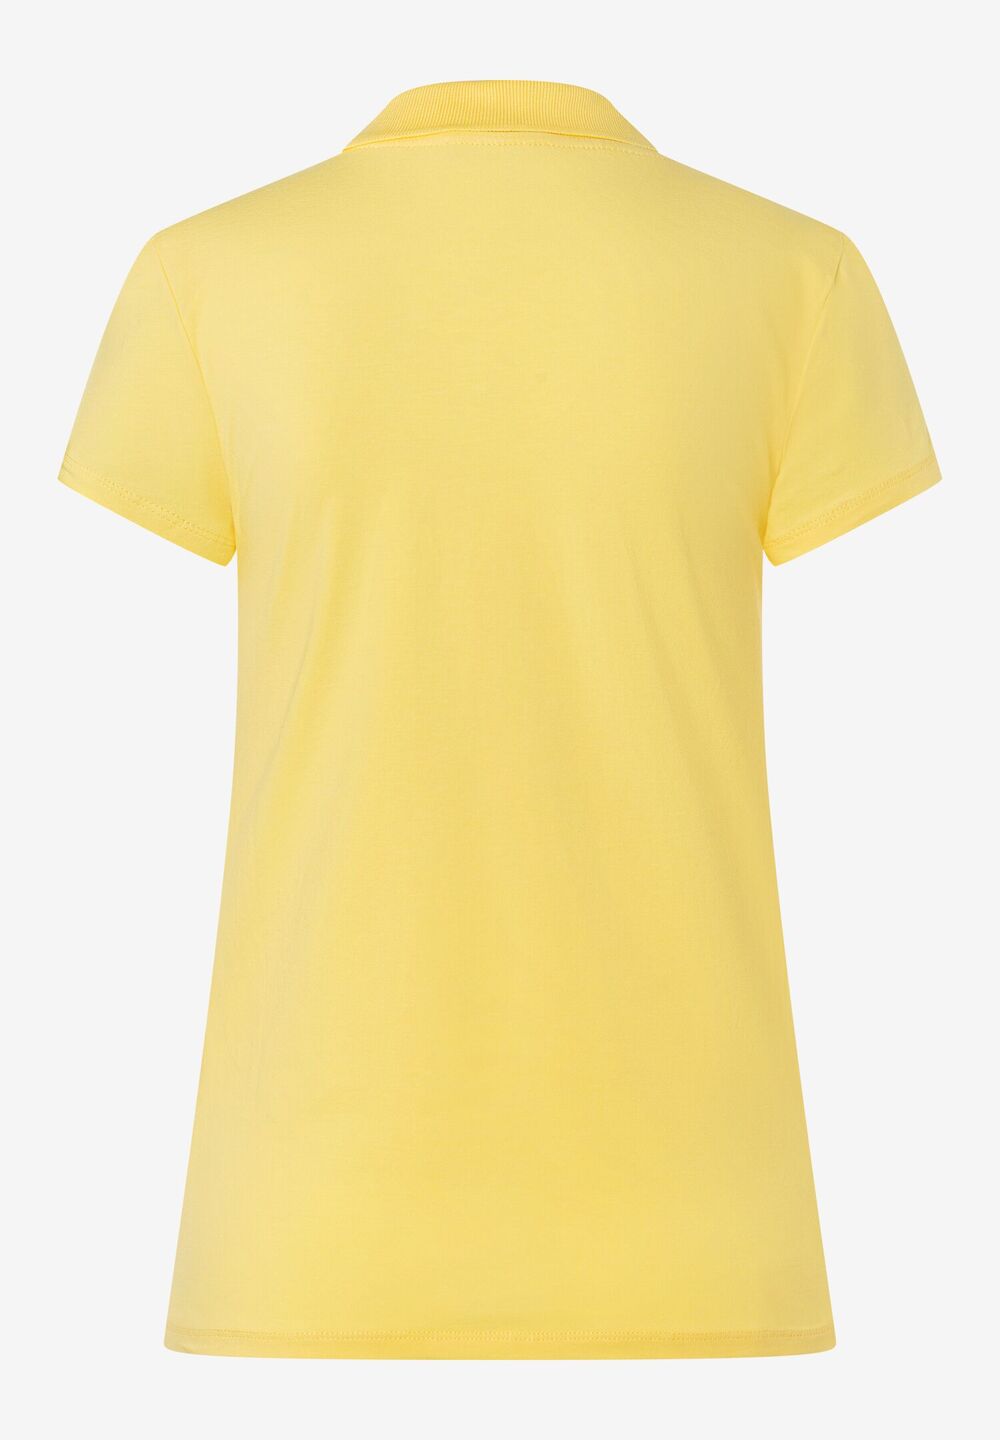 Poloshirt, daisy yellow, Frühjahrs-Kollektion, gelbDetailansicht 1